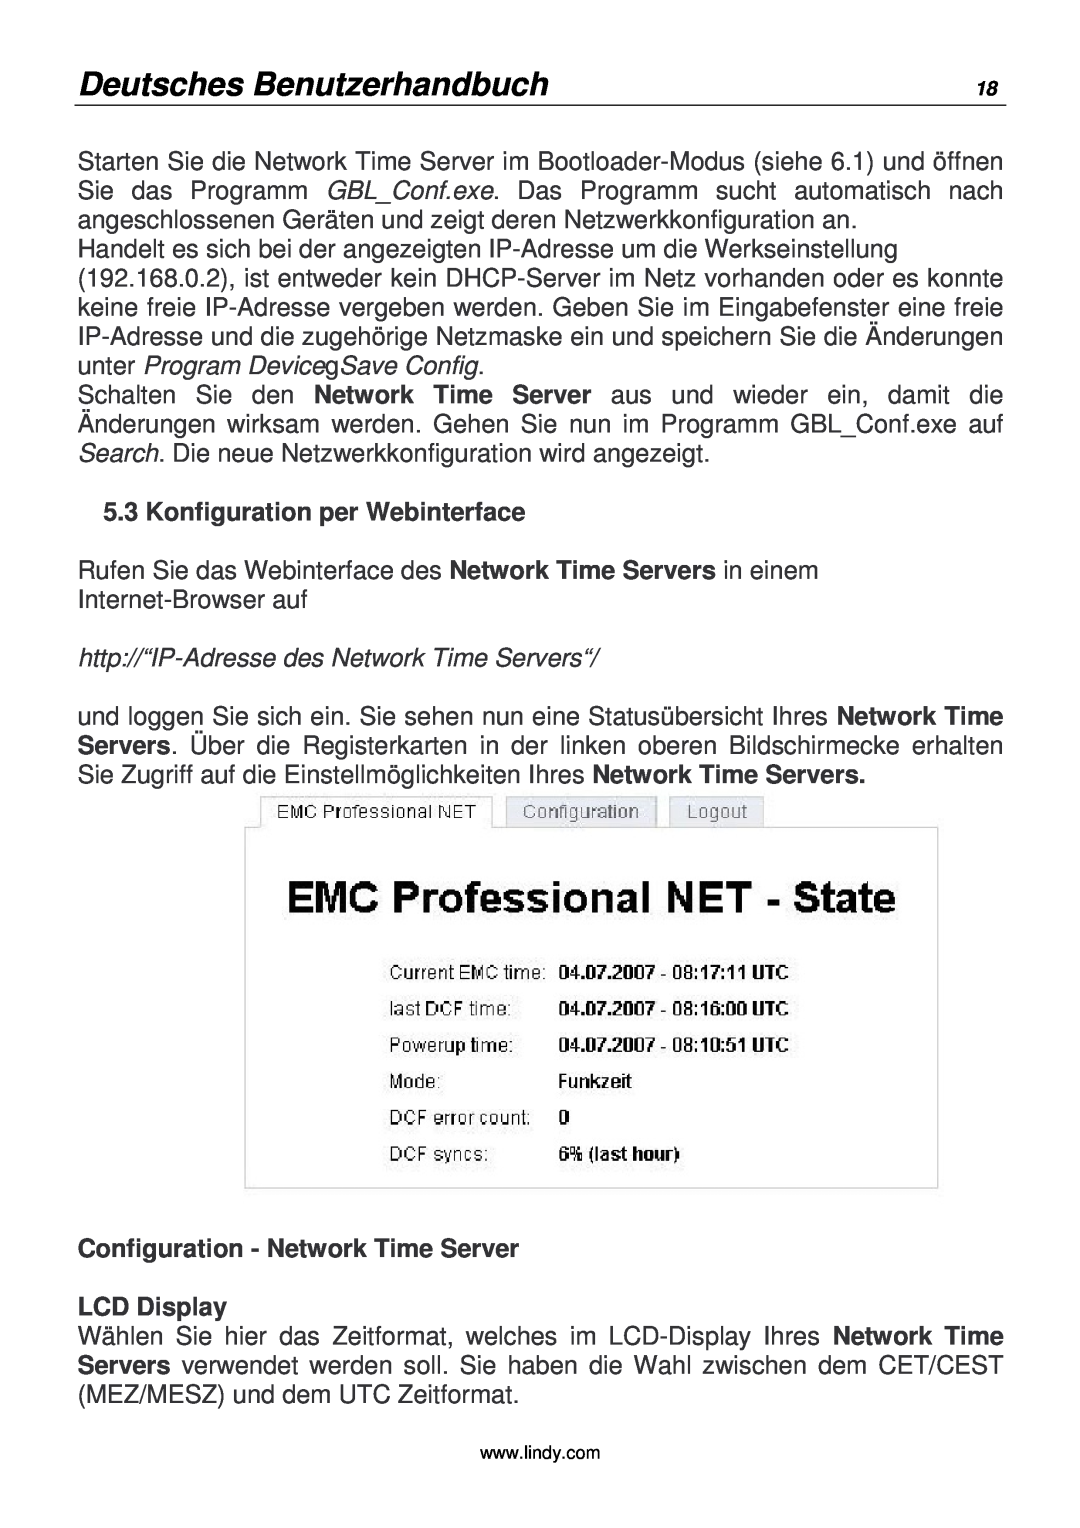 Lindy 20988 manual Deutsches Benutzerhandbuch, Konfiguration per Webinterface, http//“IP-Adresse des Network Time Servers“ 